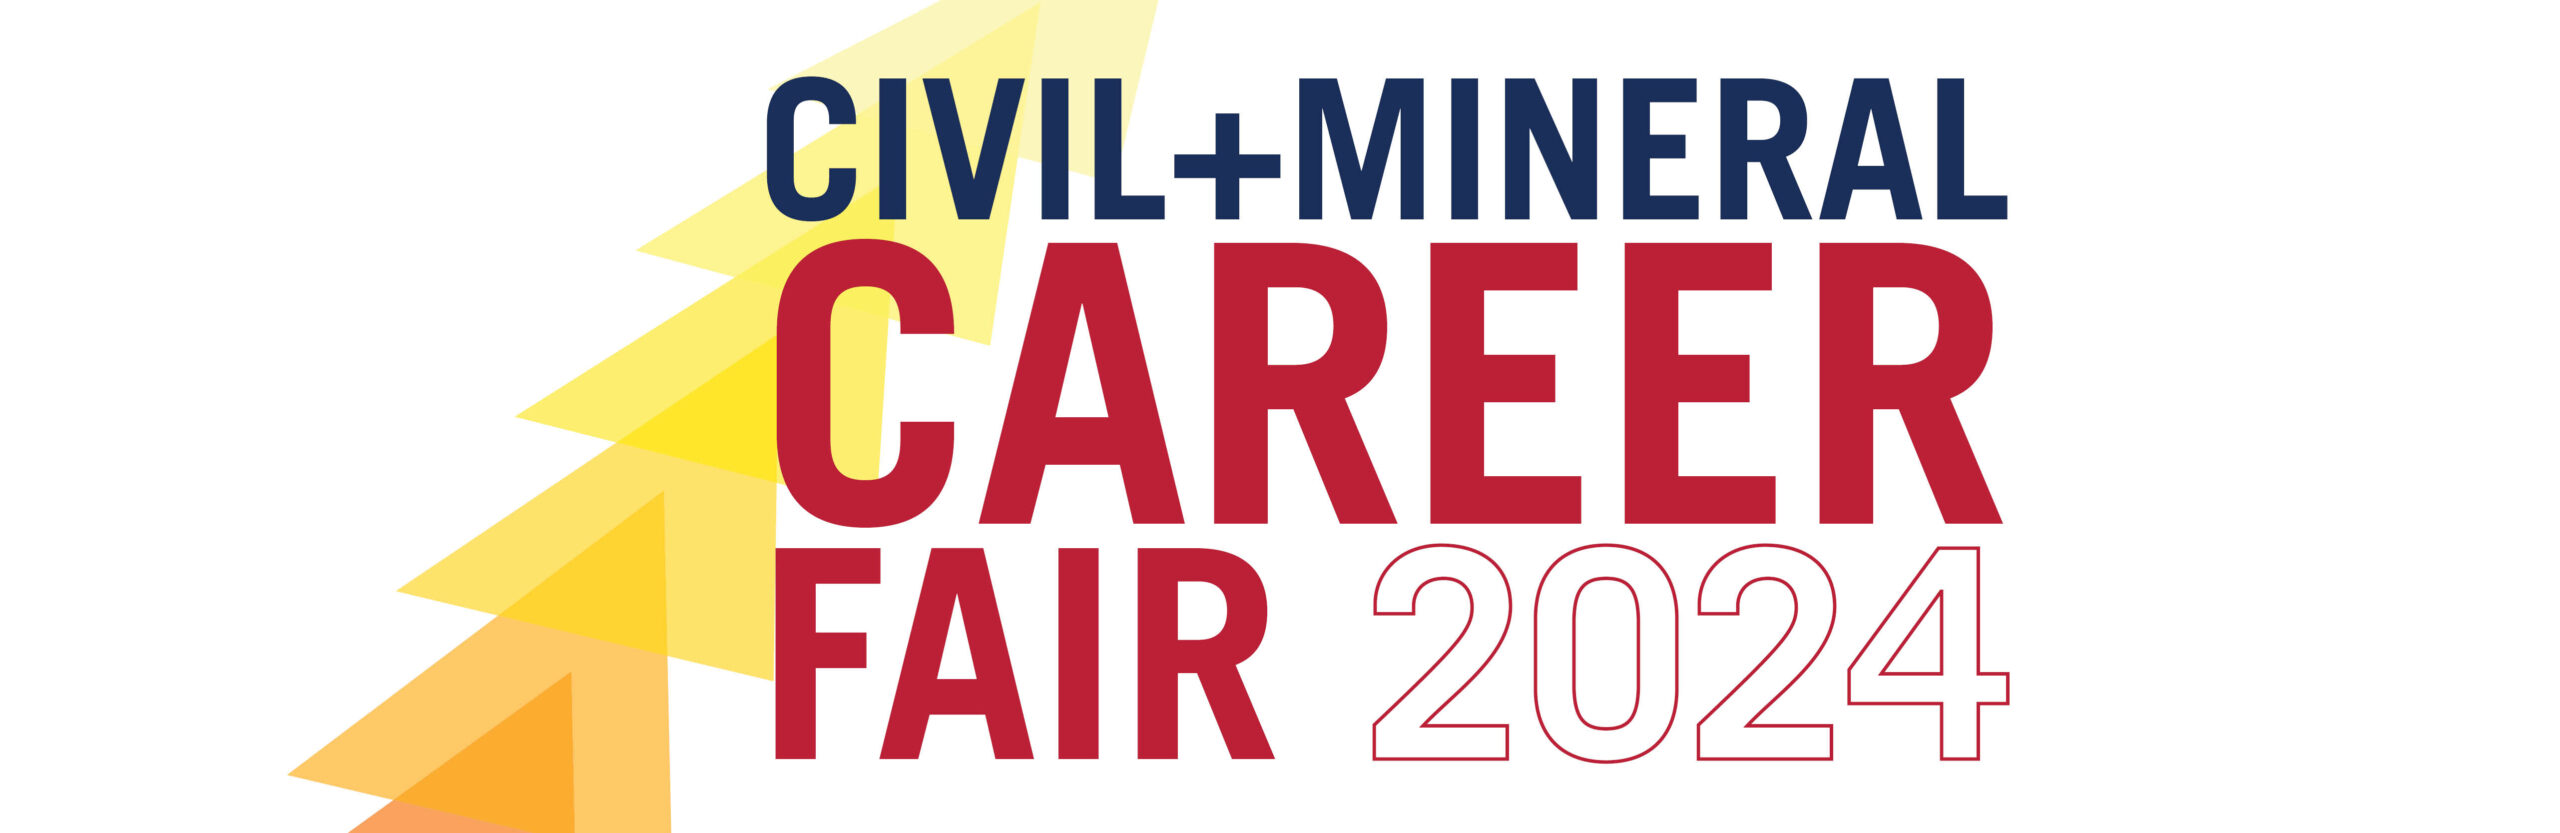 CivMin Career Fair 2024 banner poster